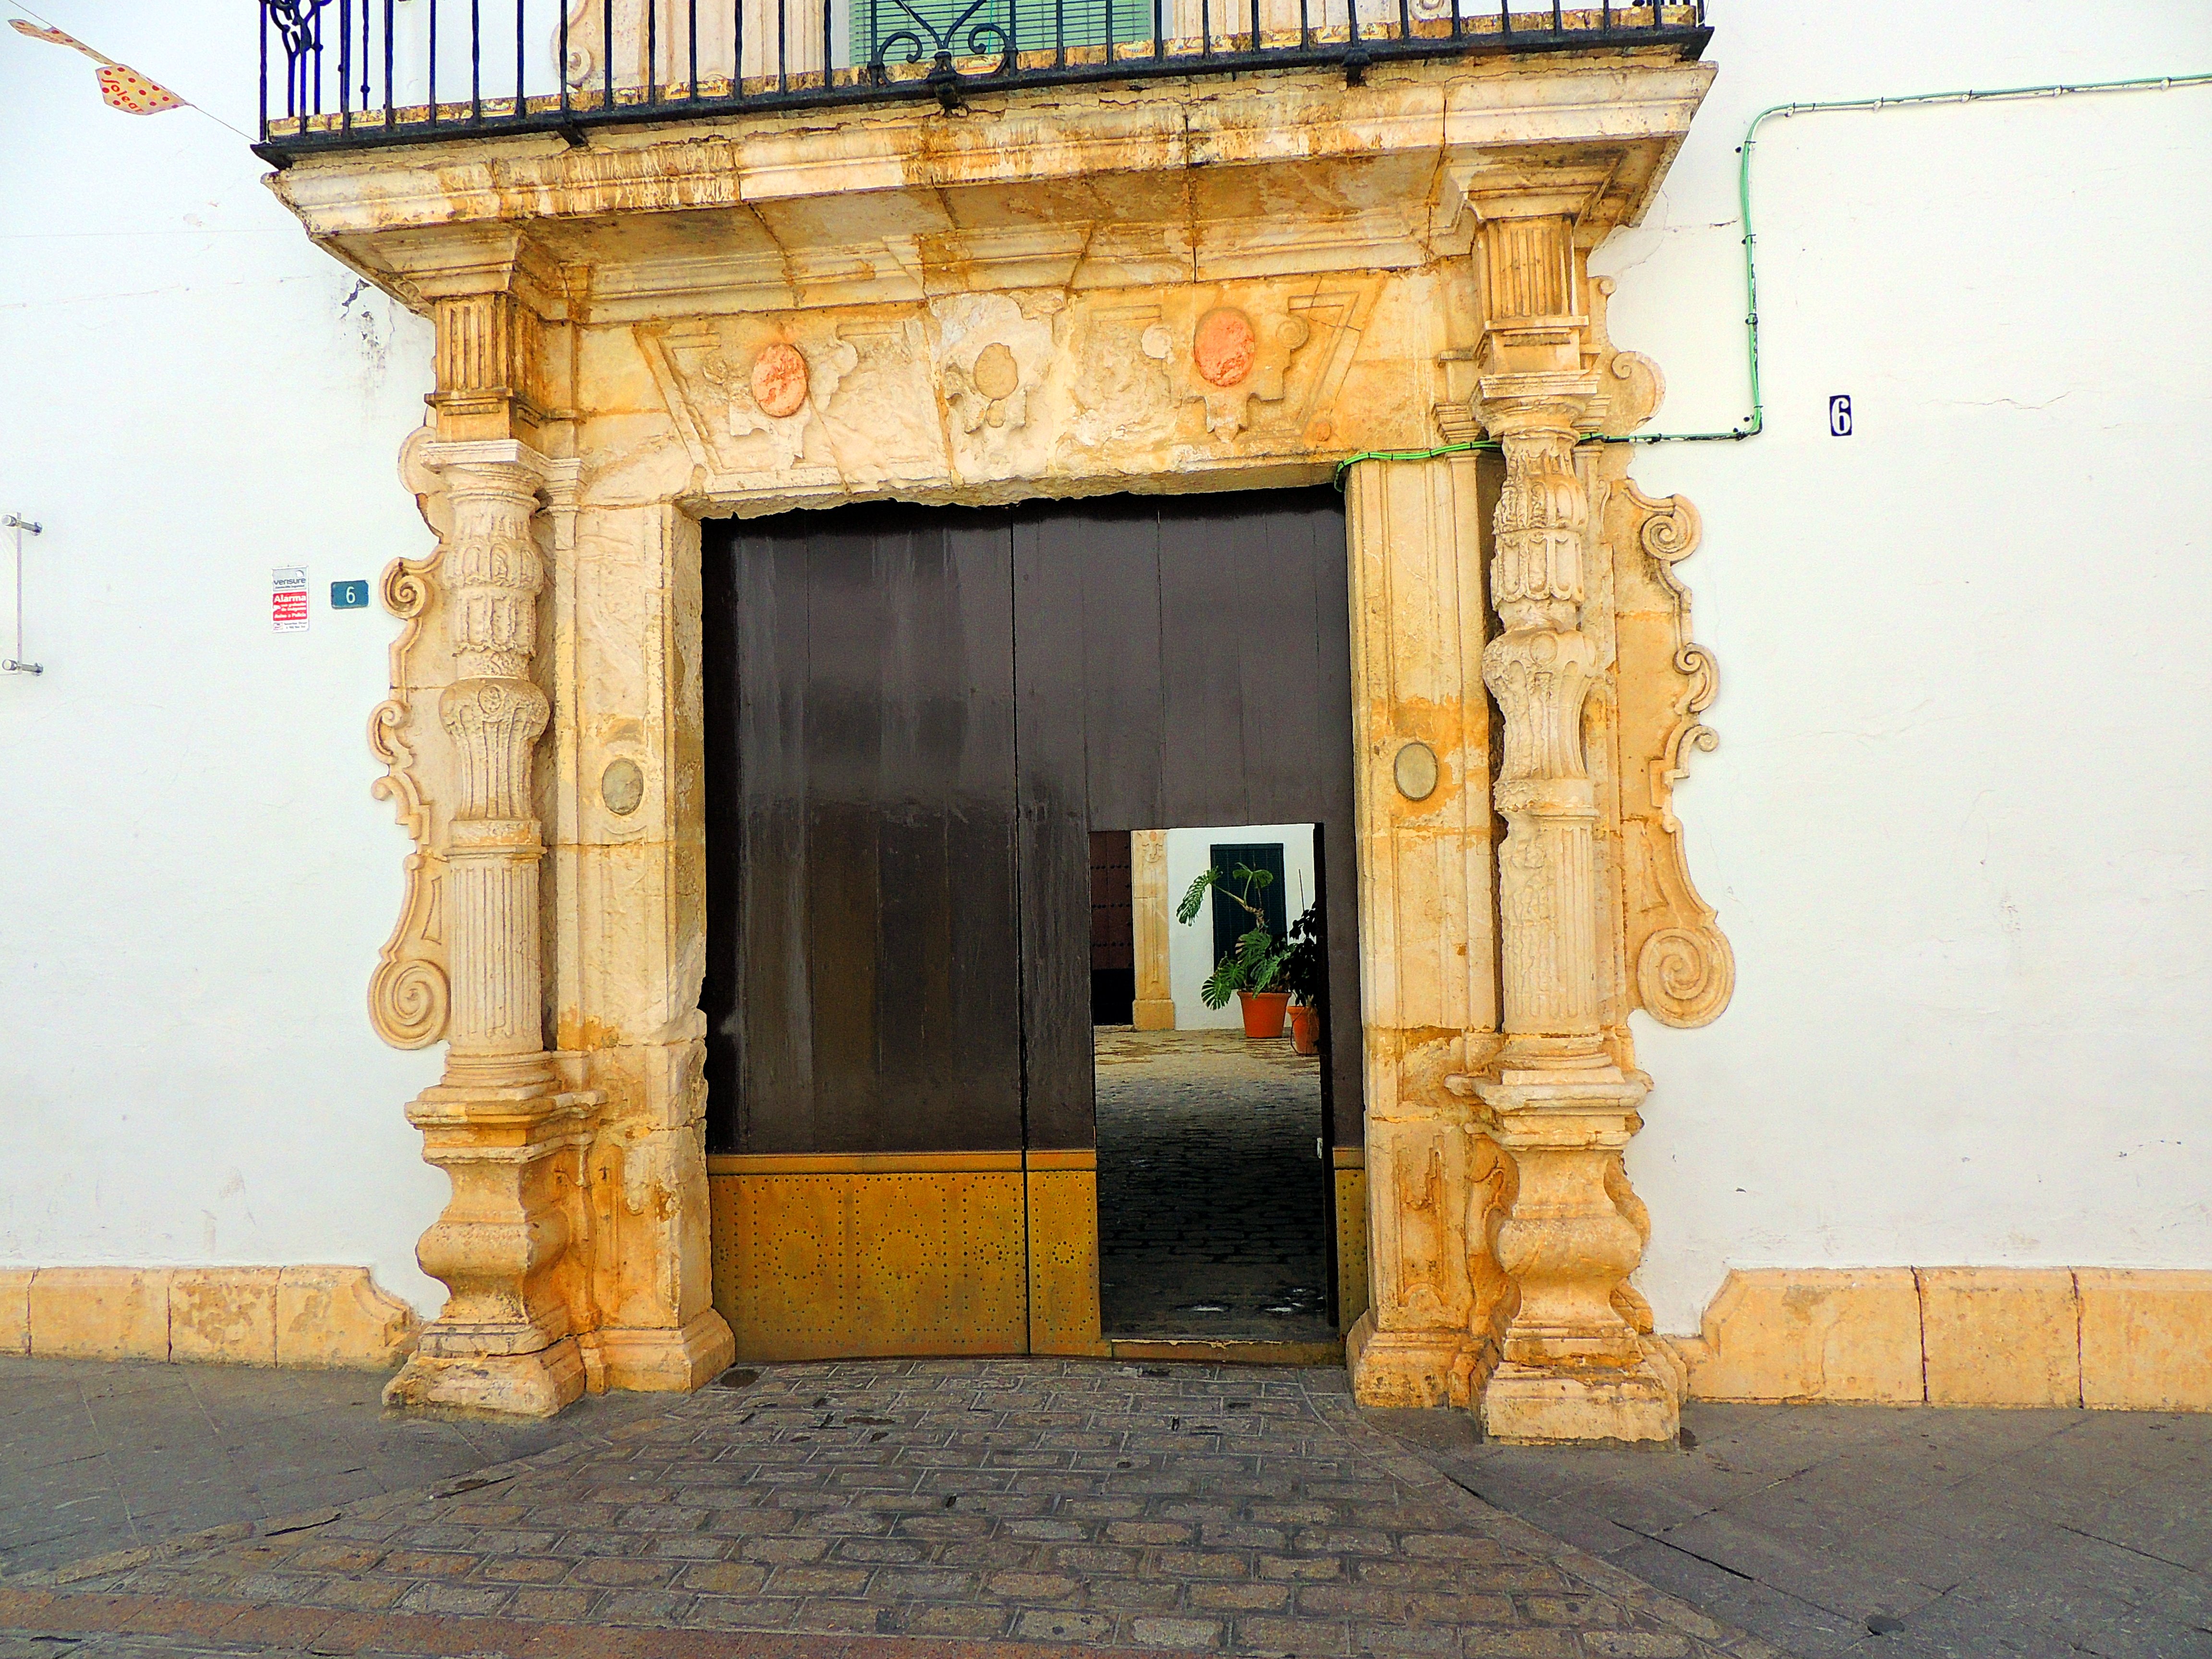 Foto de Utrera (Sevilla), España